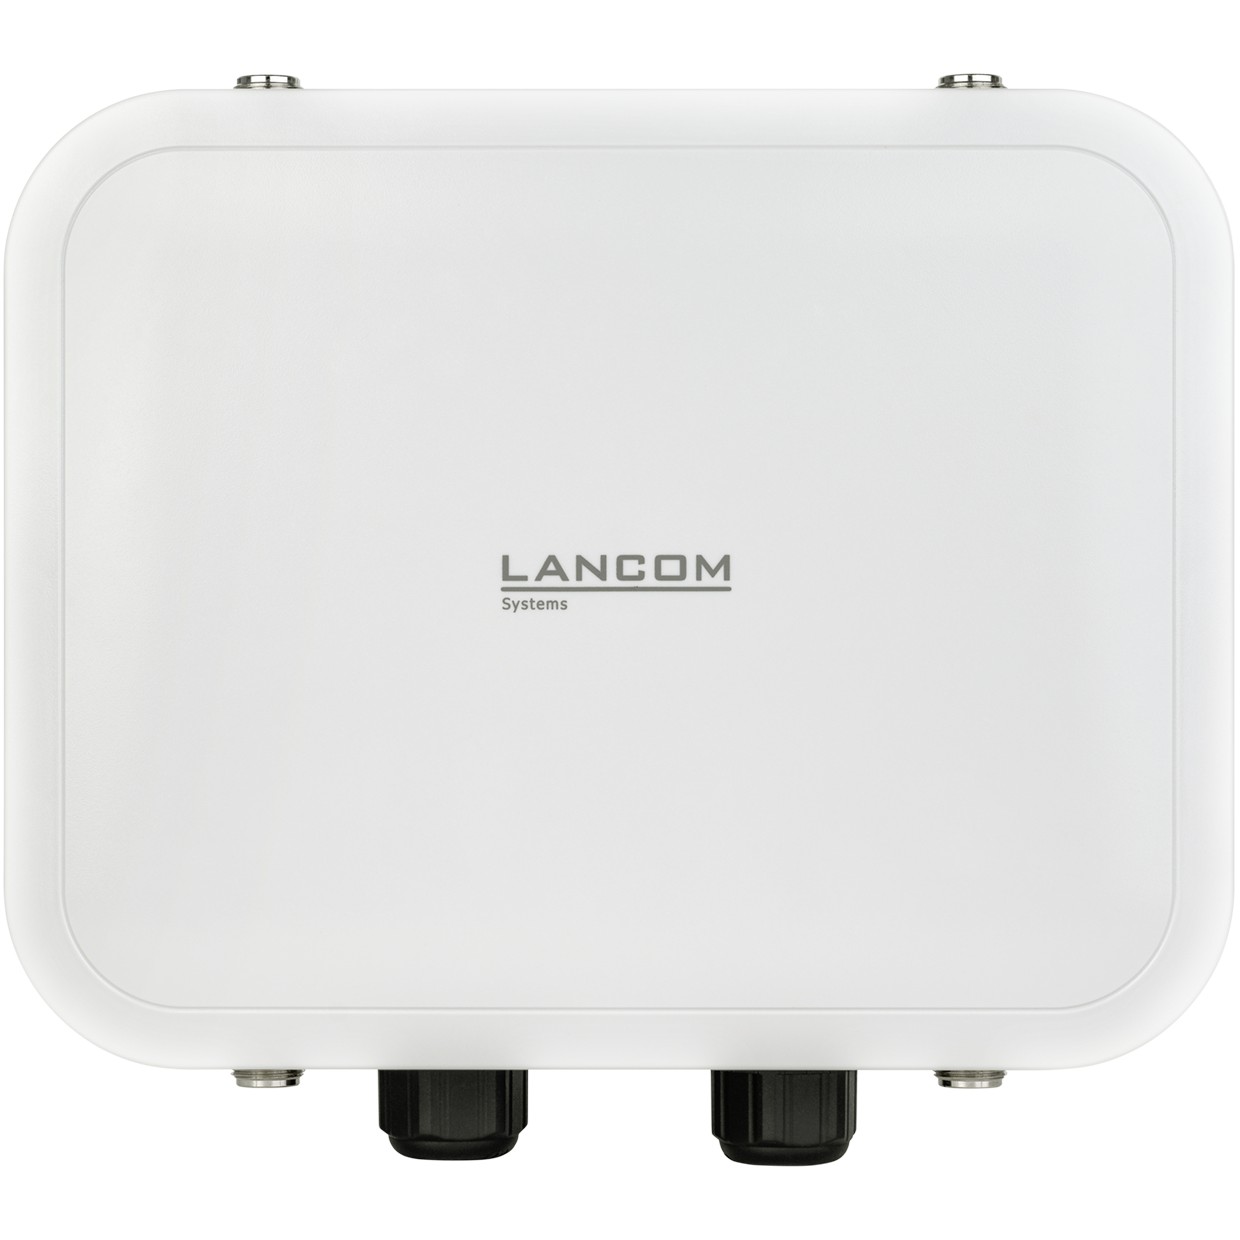 LANCOM 61664, Accesspoints, Lancom Systems OW-602 61664 (BILD1)